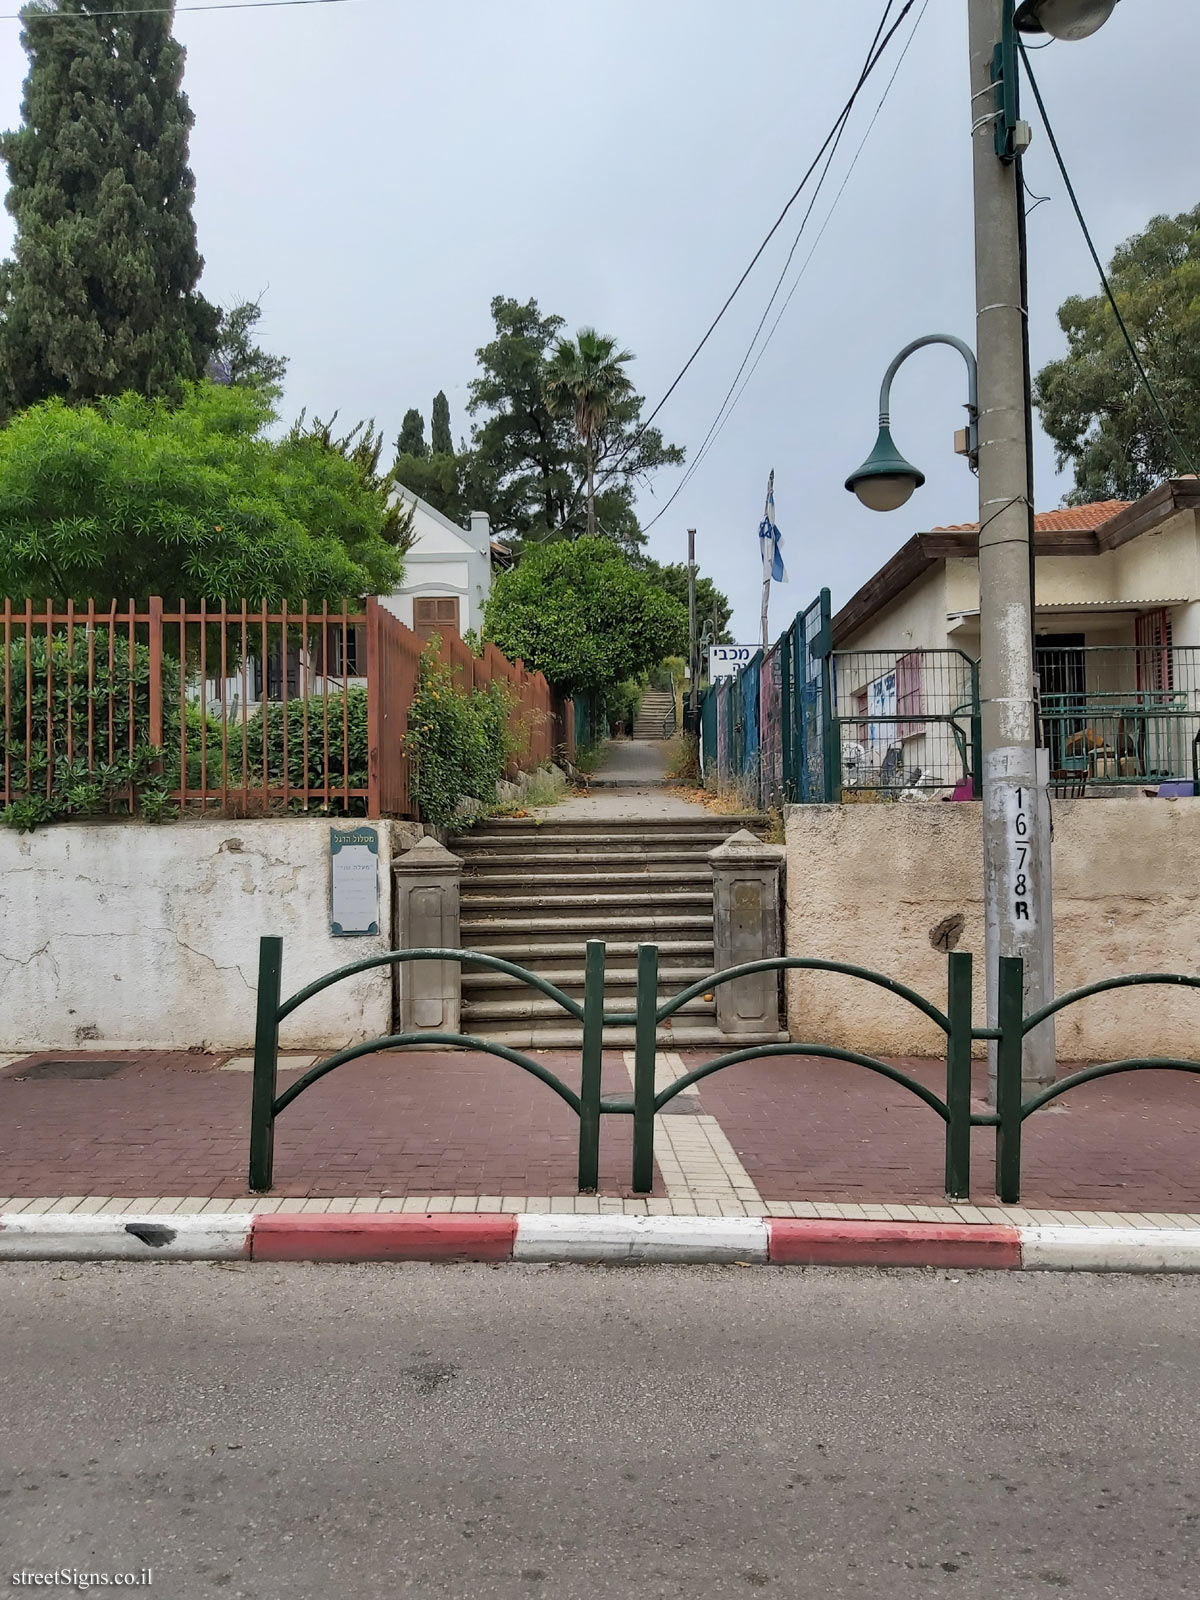 Ness Ziona - Flag trail - "Maale Shani"  - Tel Aviv St 16, Ness Ziona, Israel